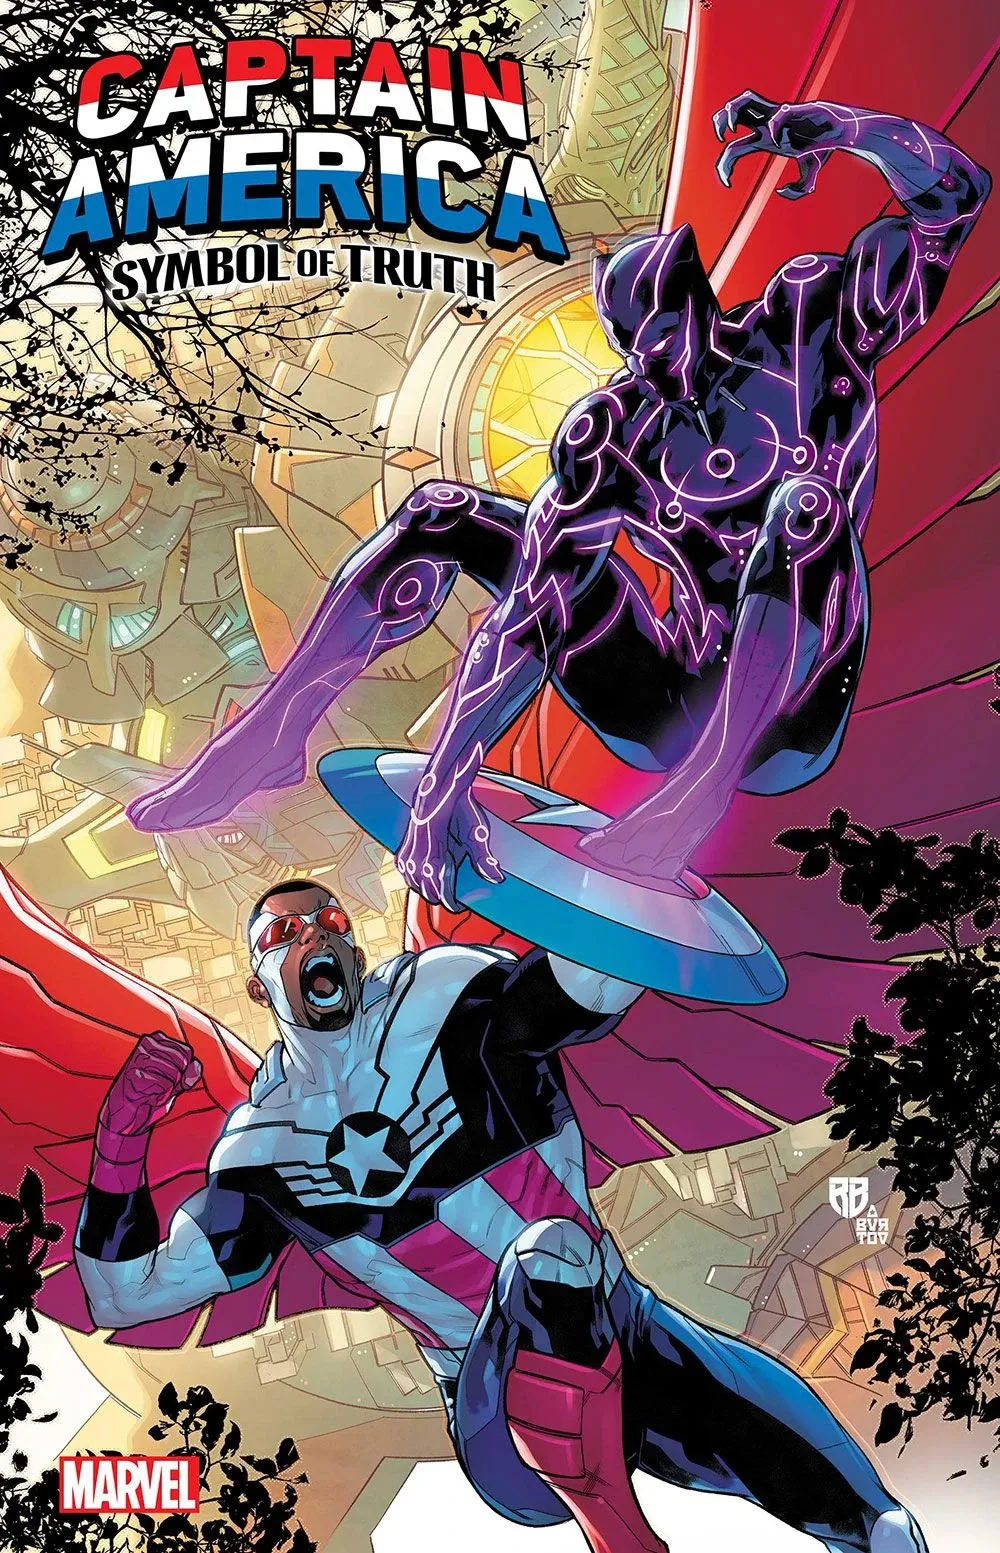 Captain America vs Black Panther Decides the Future of Wakanda